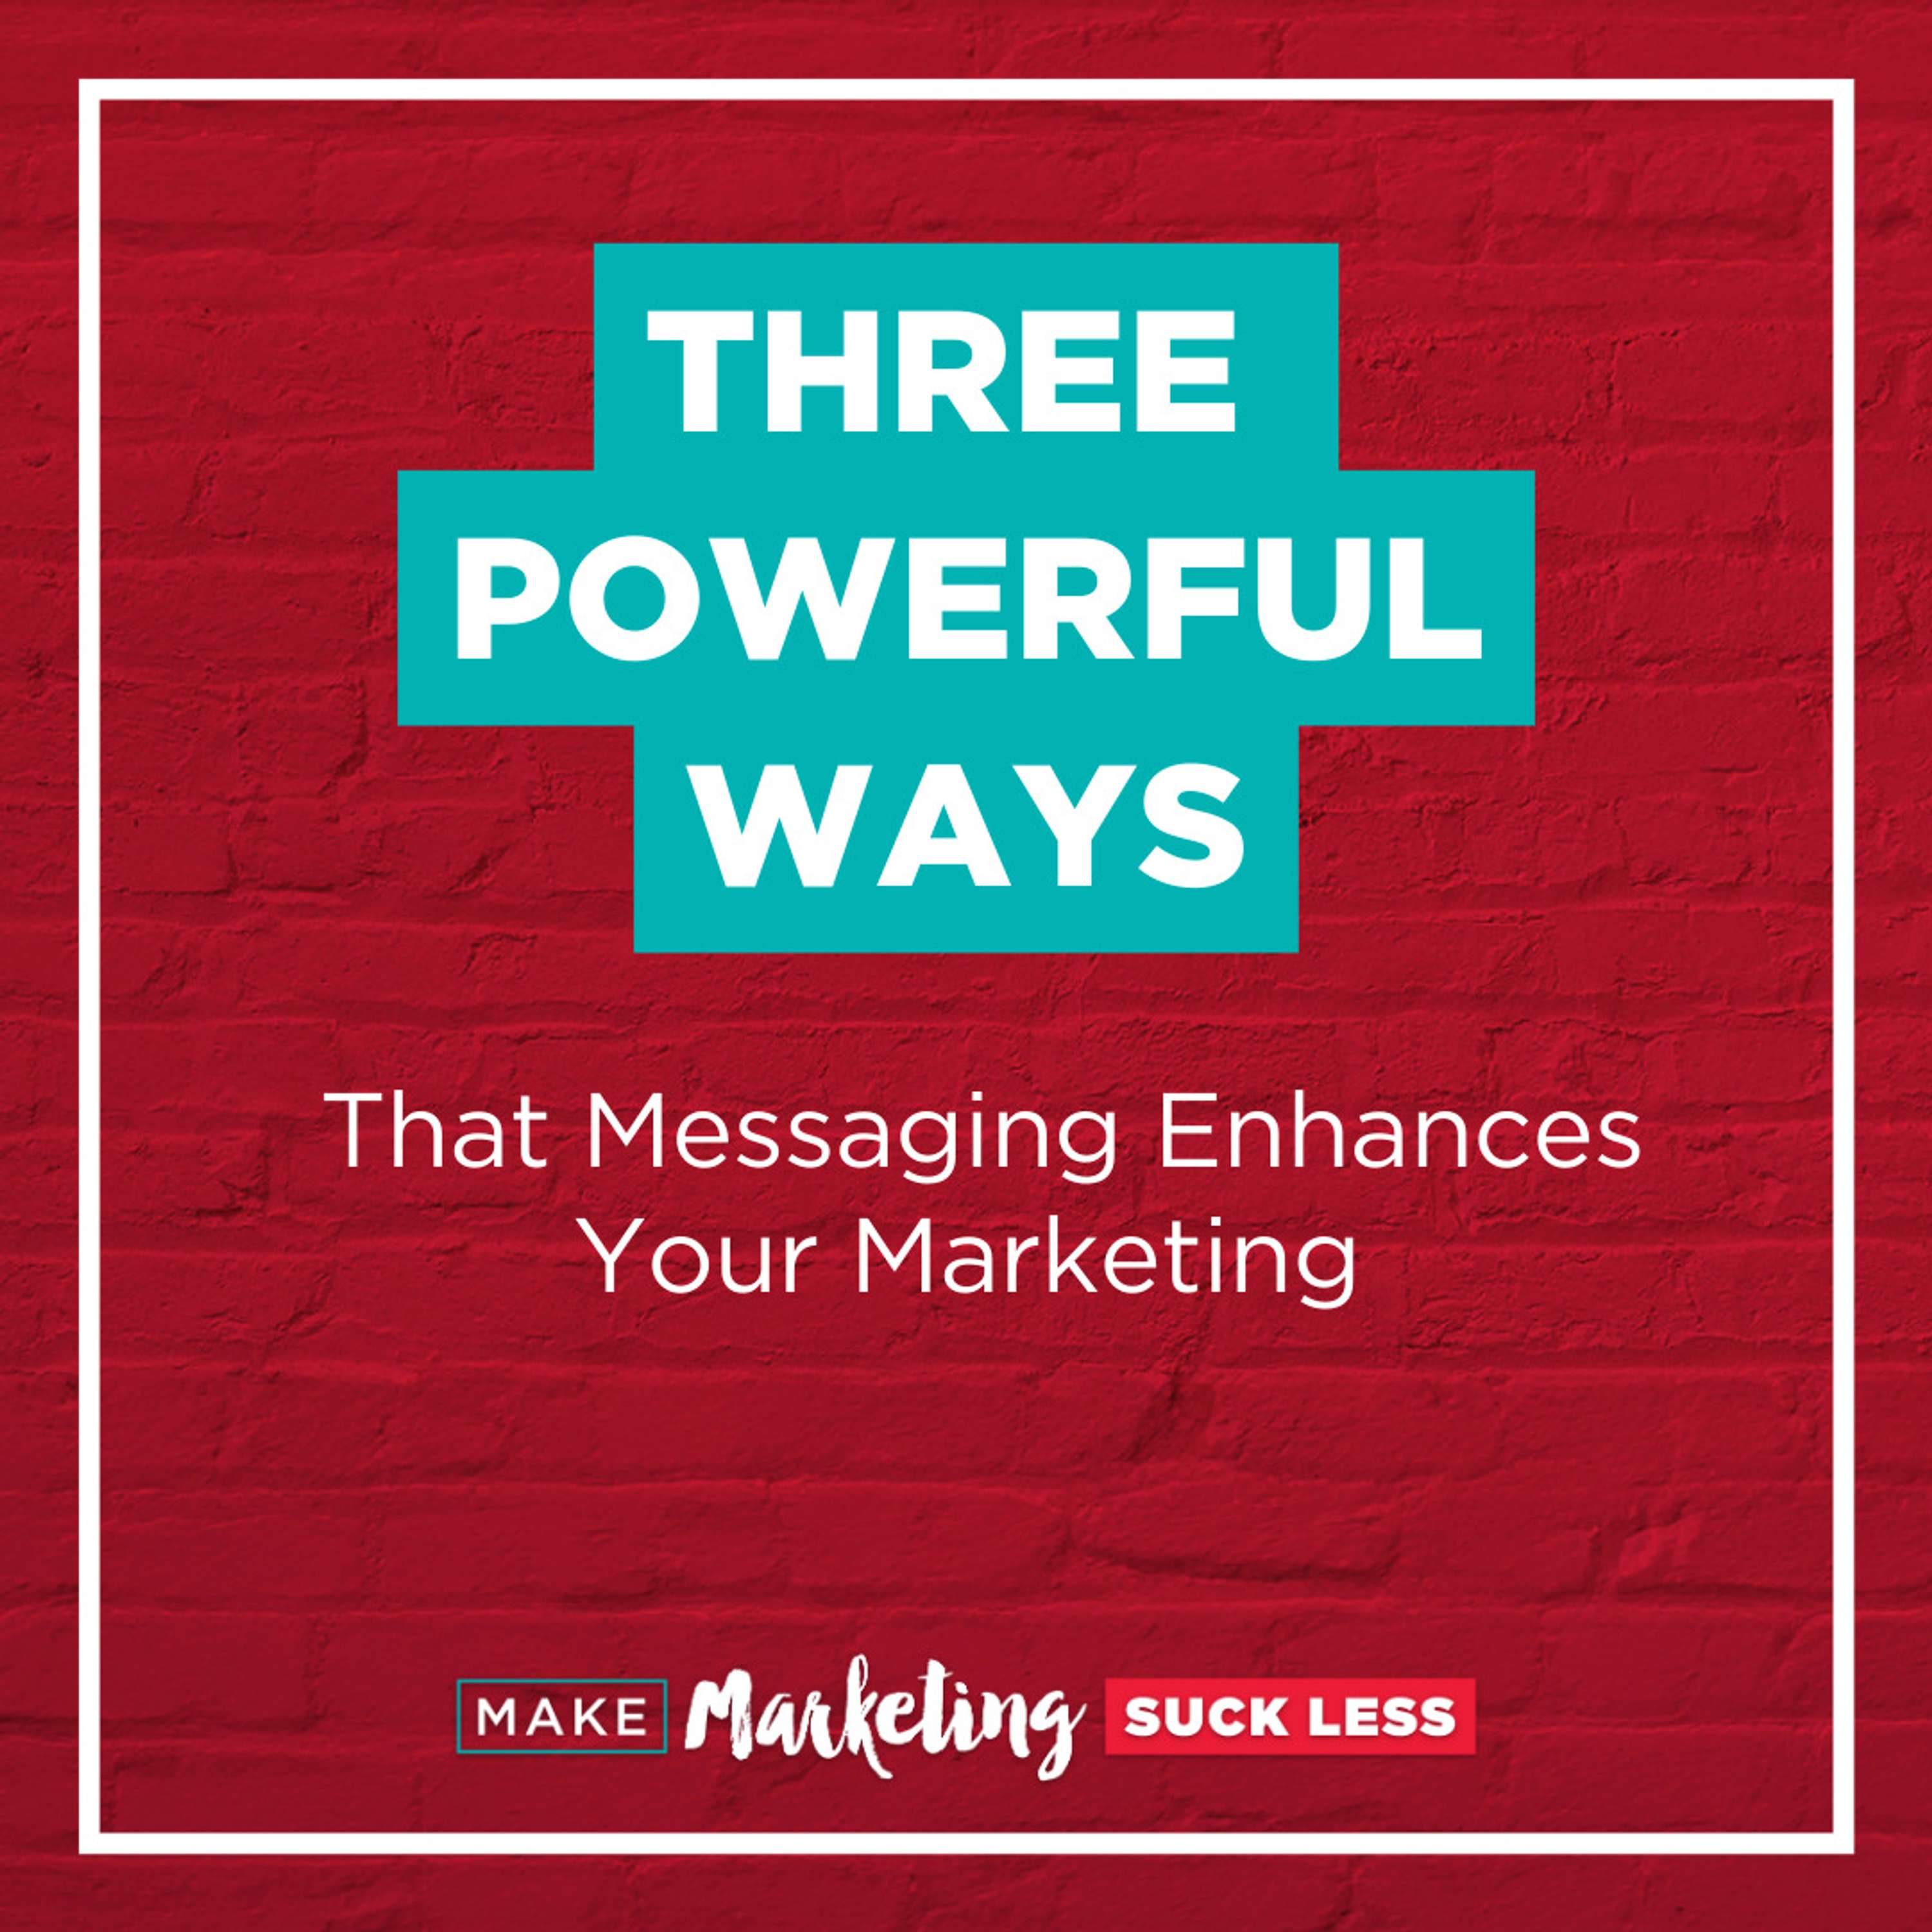 Three Powerful Ways That Messaging Enhances Your Marketing